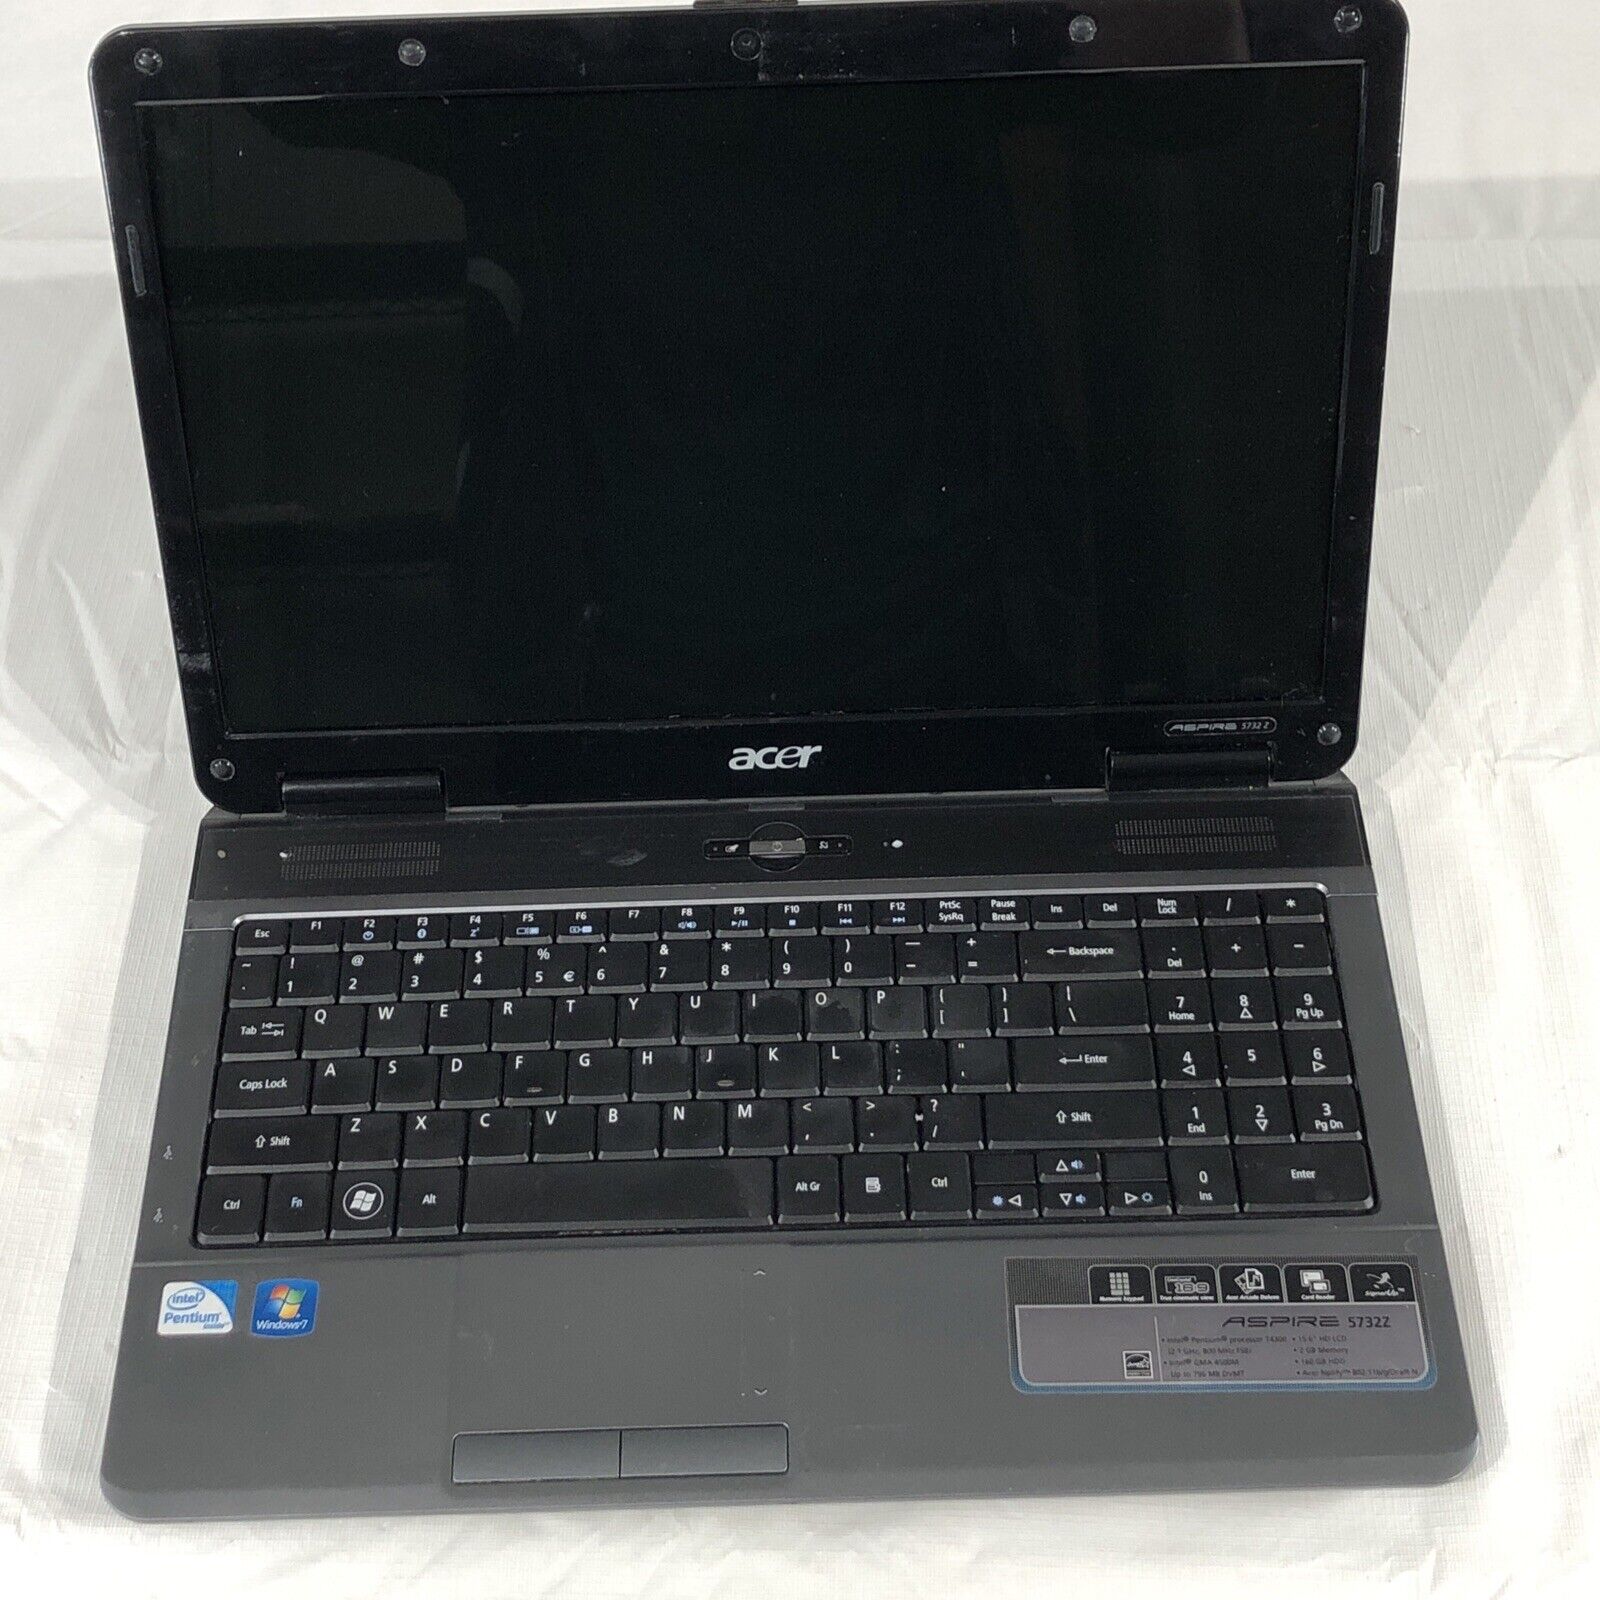 Acer Aspire 5732Z Intel Pentium T4300 @2.1GHz 4GB RAM No HDD/OS Read